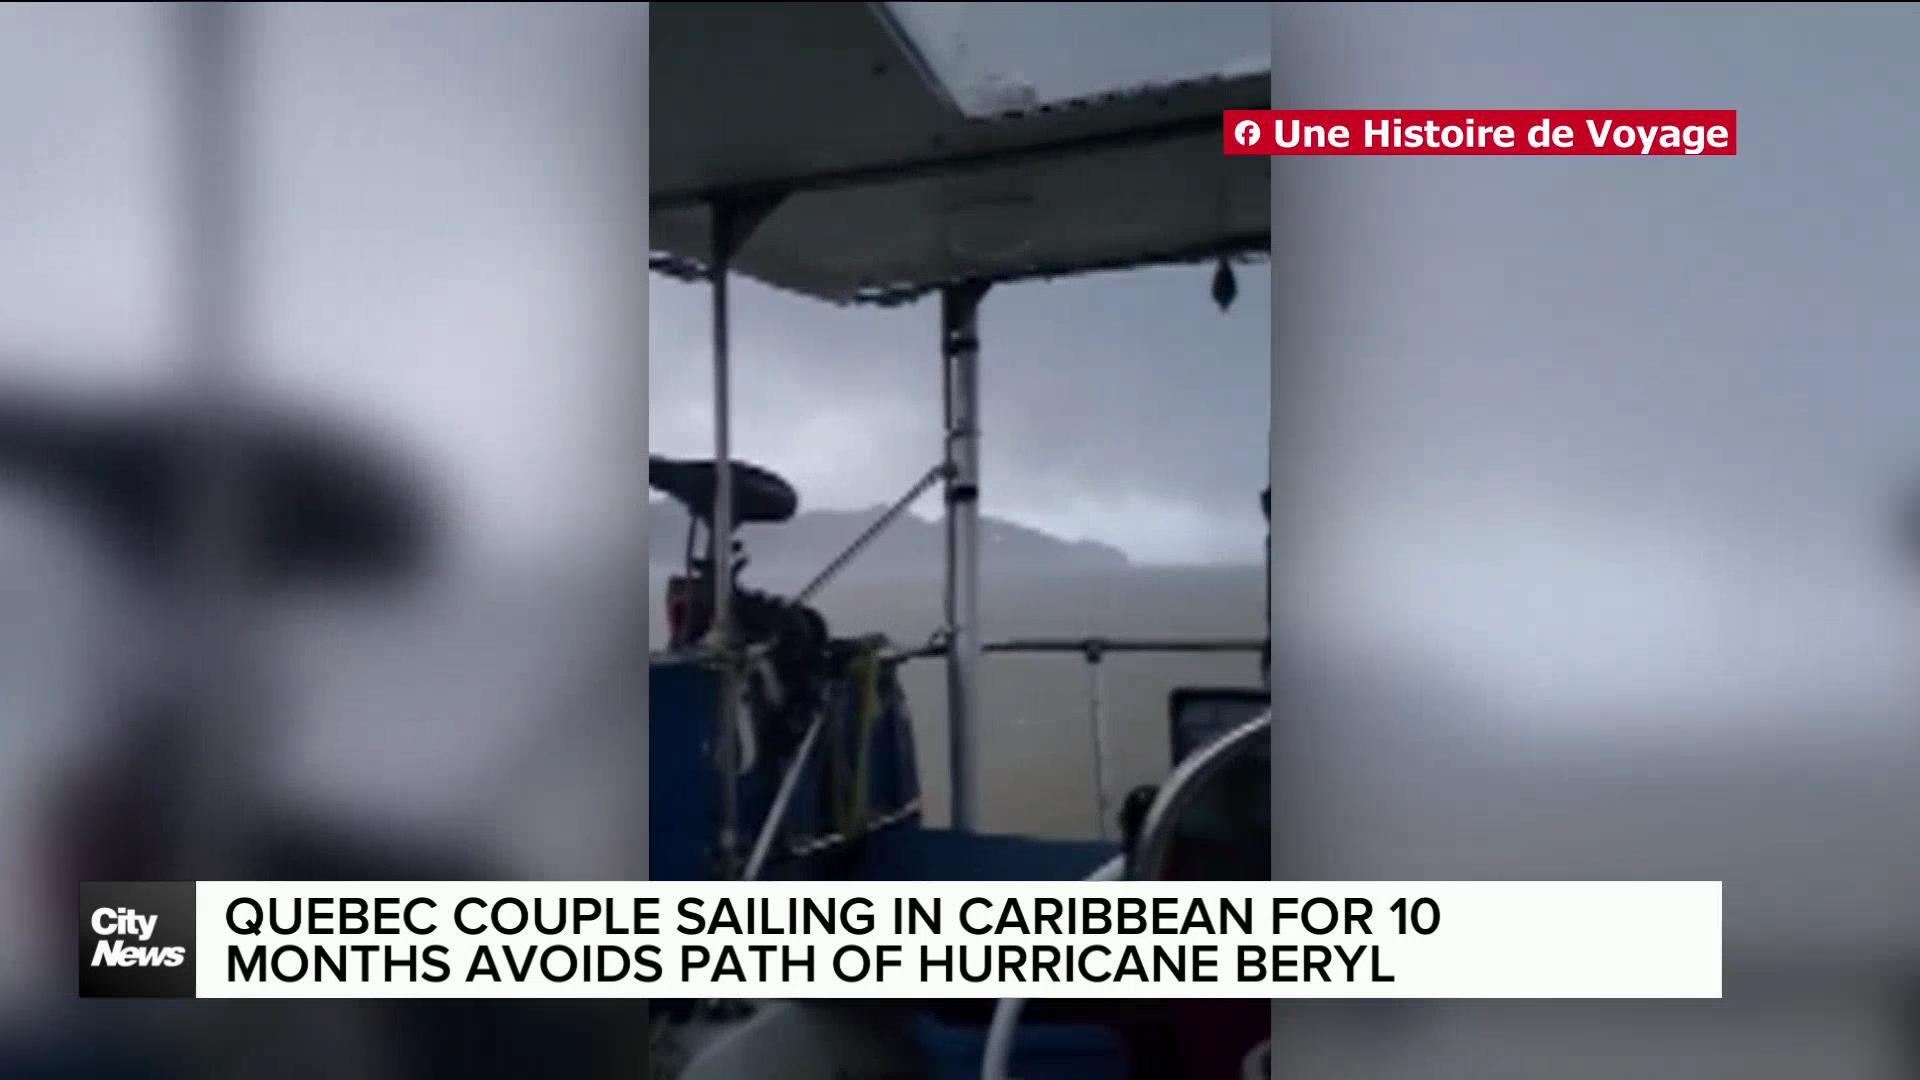 Quebec couple sailing around Caribbean avoids path of Hurricane Beryl